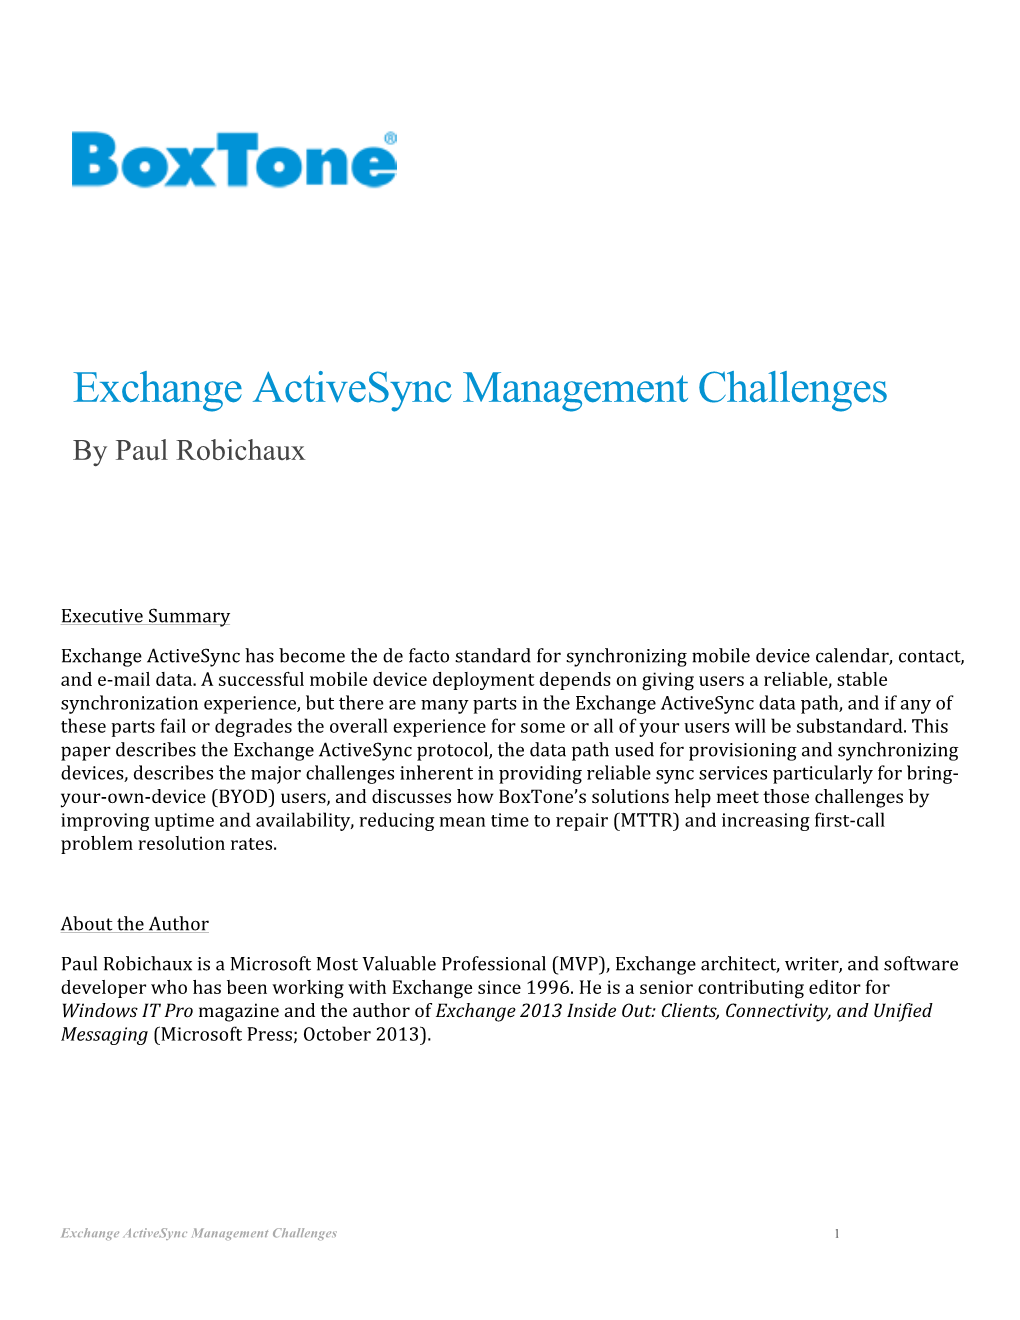 Exchange Activesync Management Challenges by Paul Robichaux